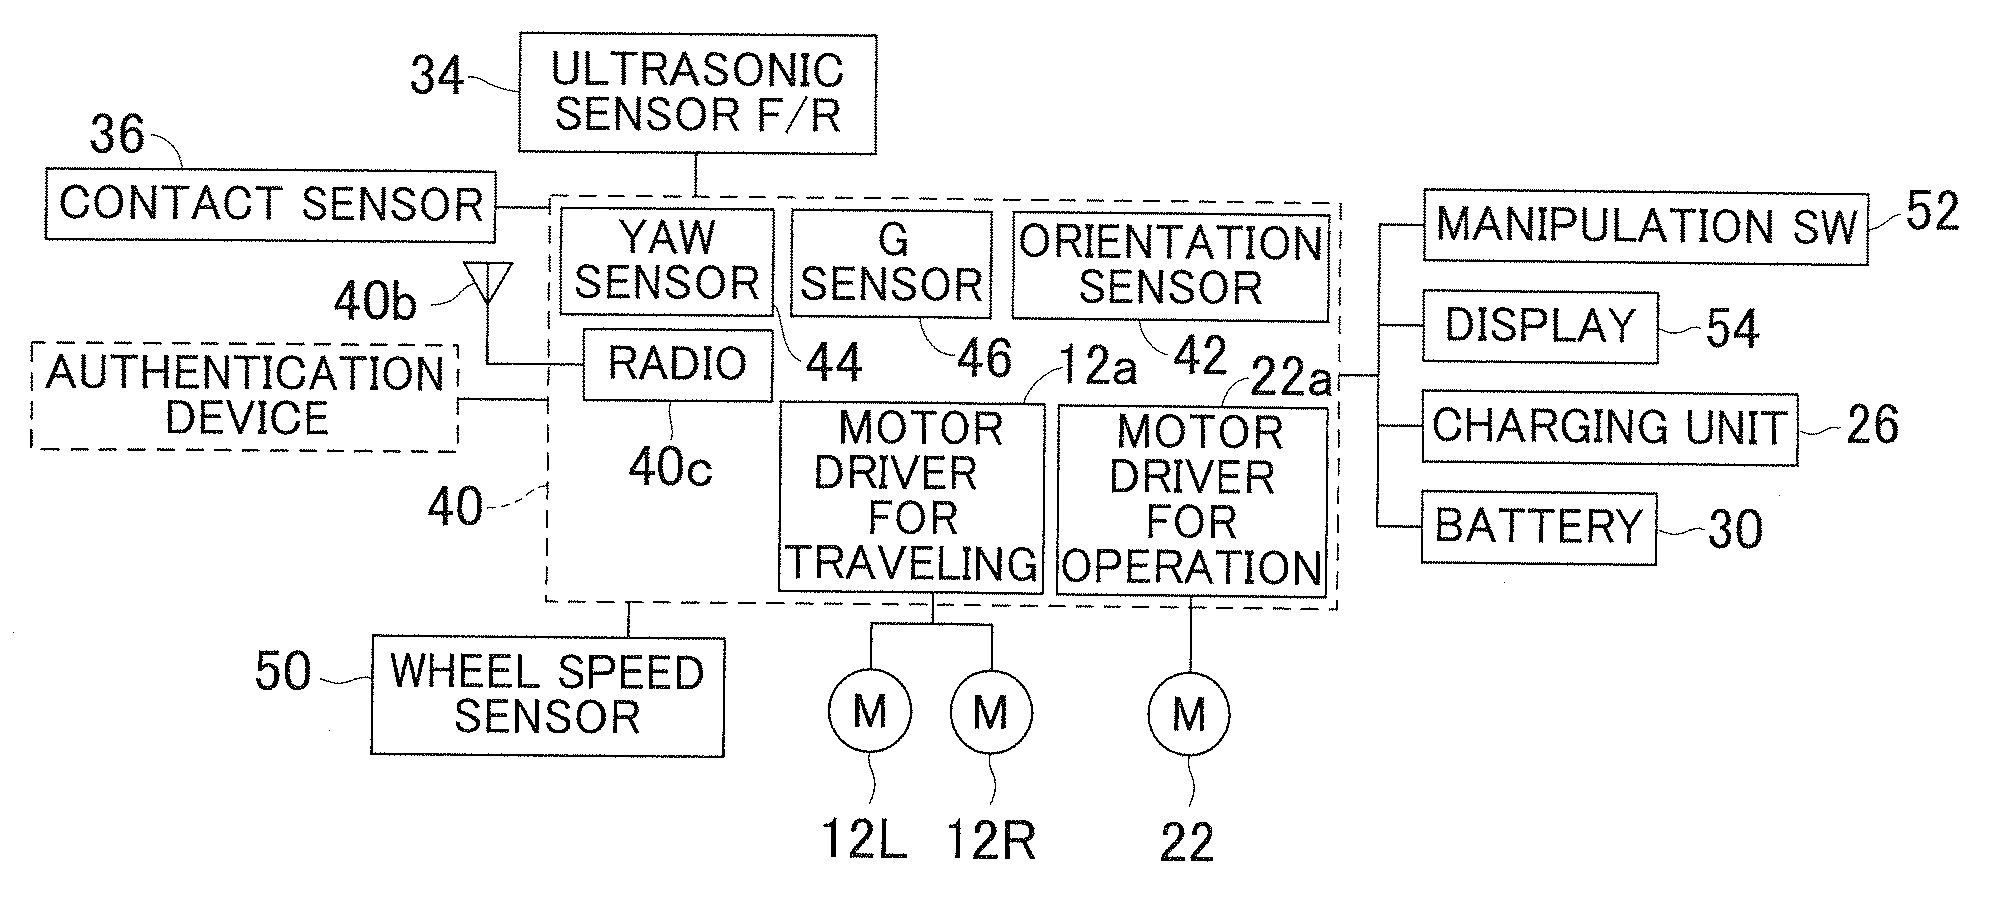 Control apparatus for autonomous operating vehicle